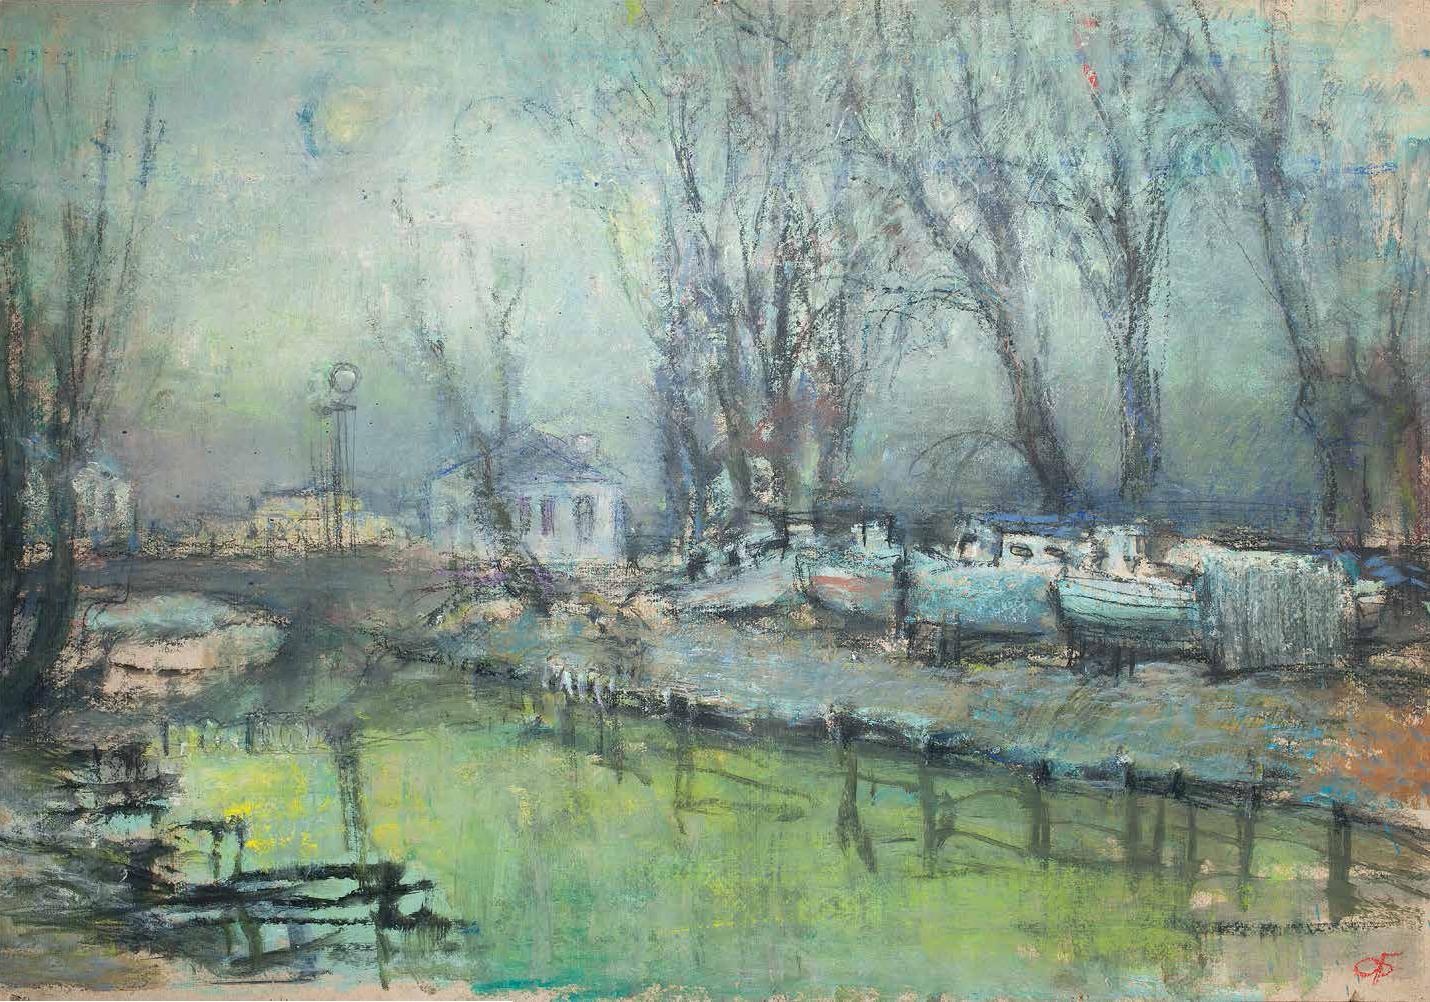 Boats. Smolenka river, 2004. Original modern art painting